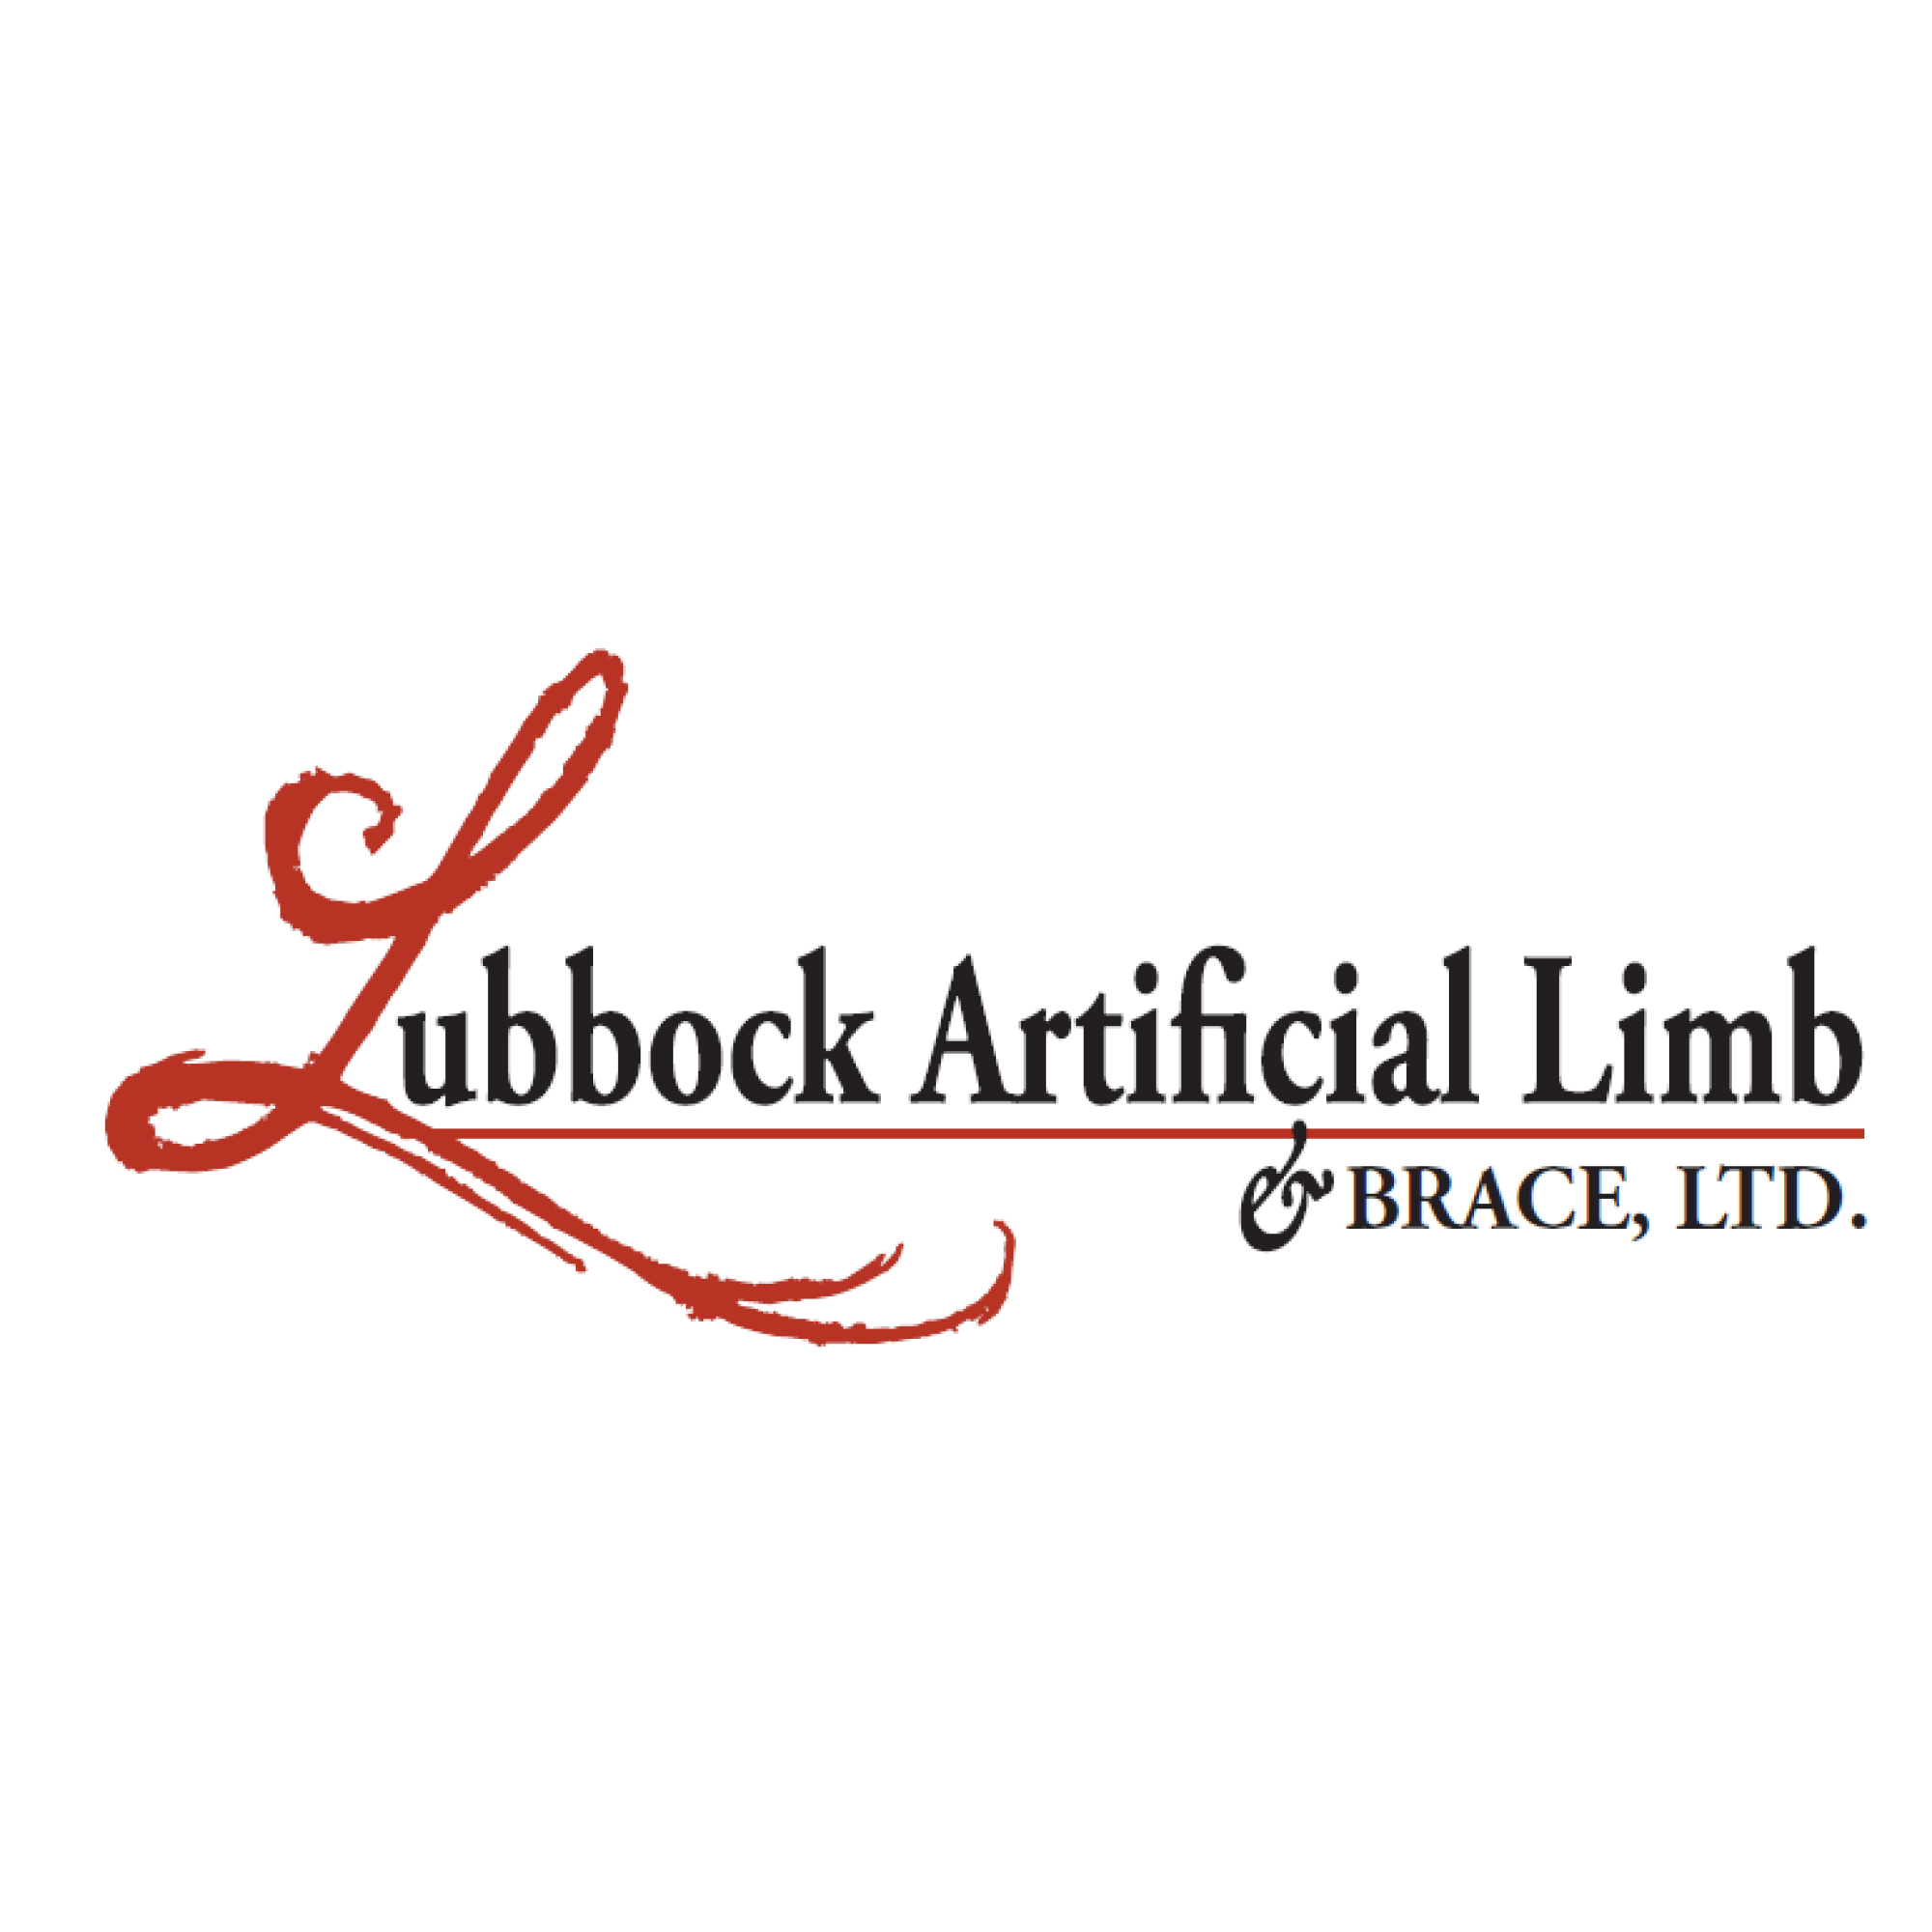 Lubbock Artificial Limb & Brace Ltd - Lubbock, TX 79423 - (806)799-1518 | ShowMeLocal.com